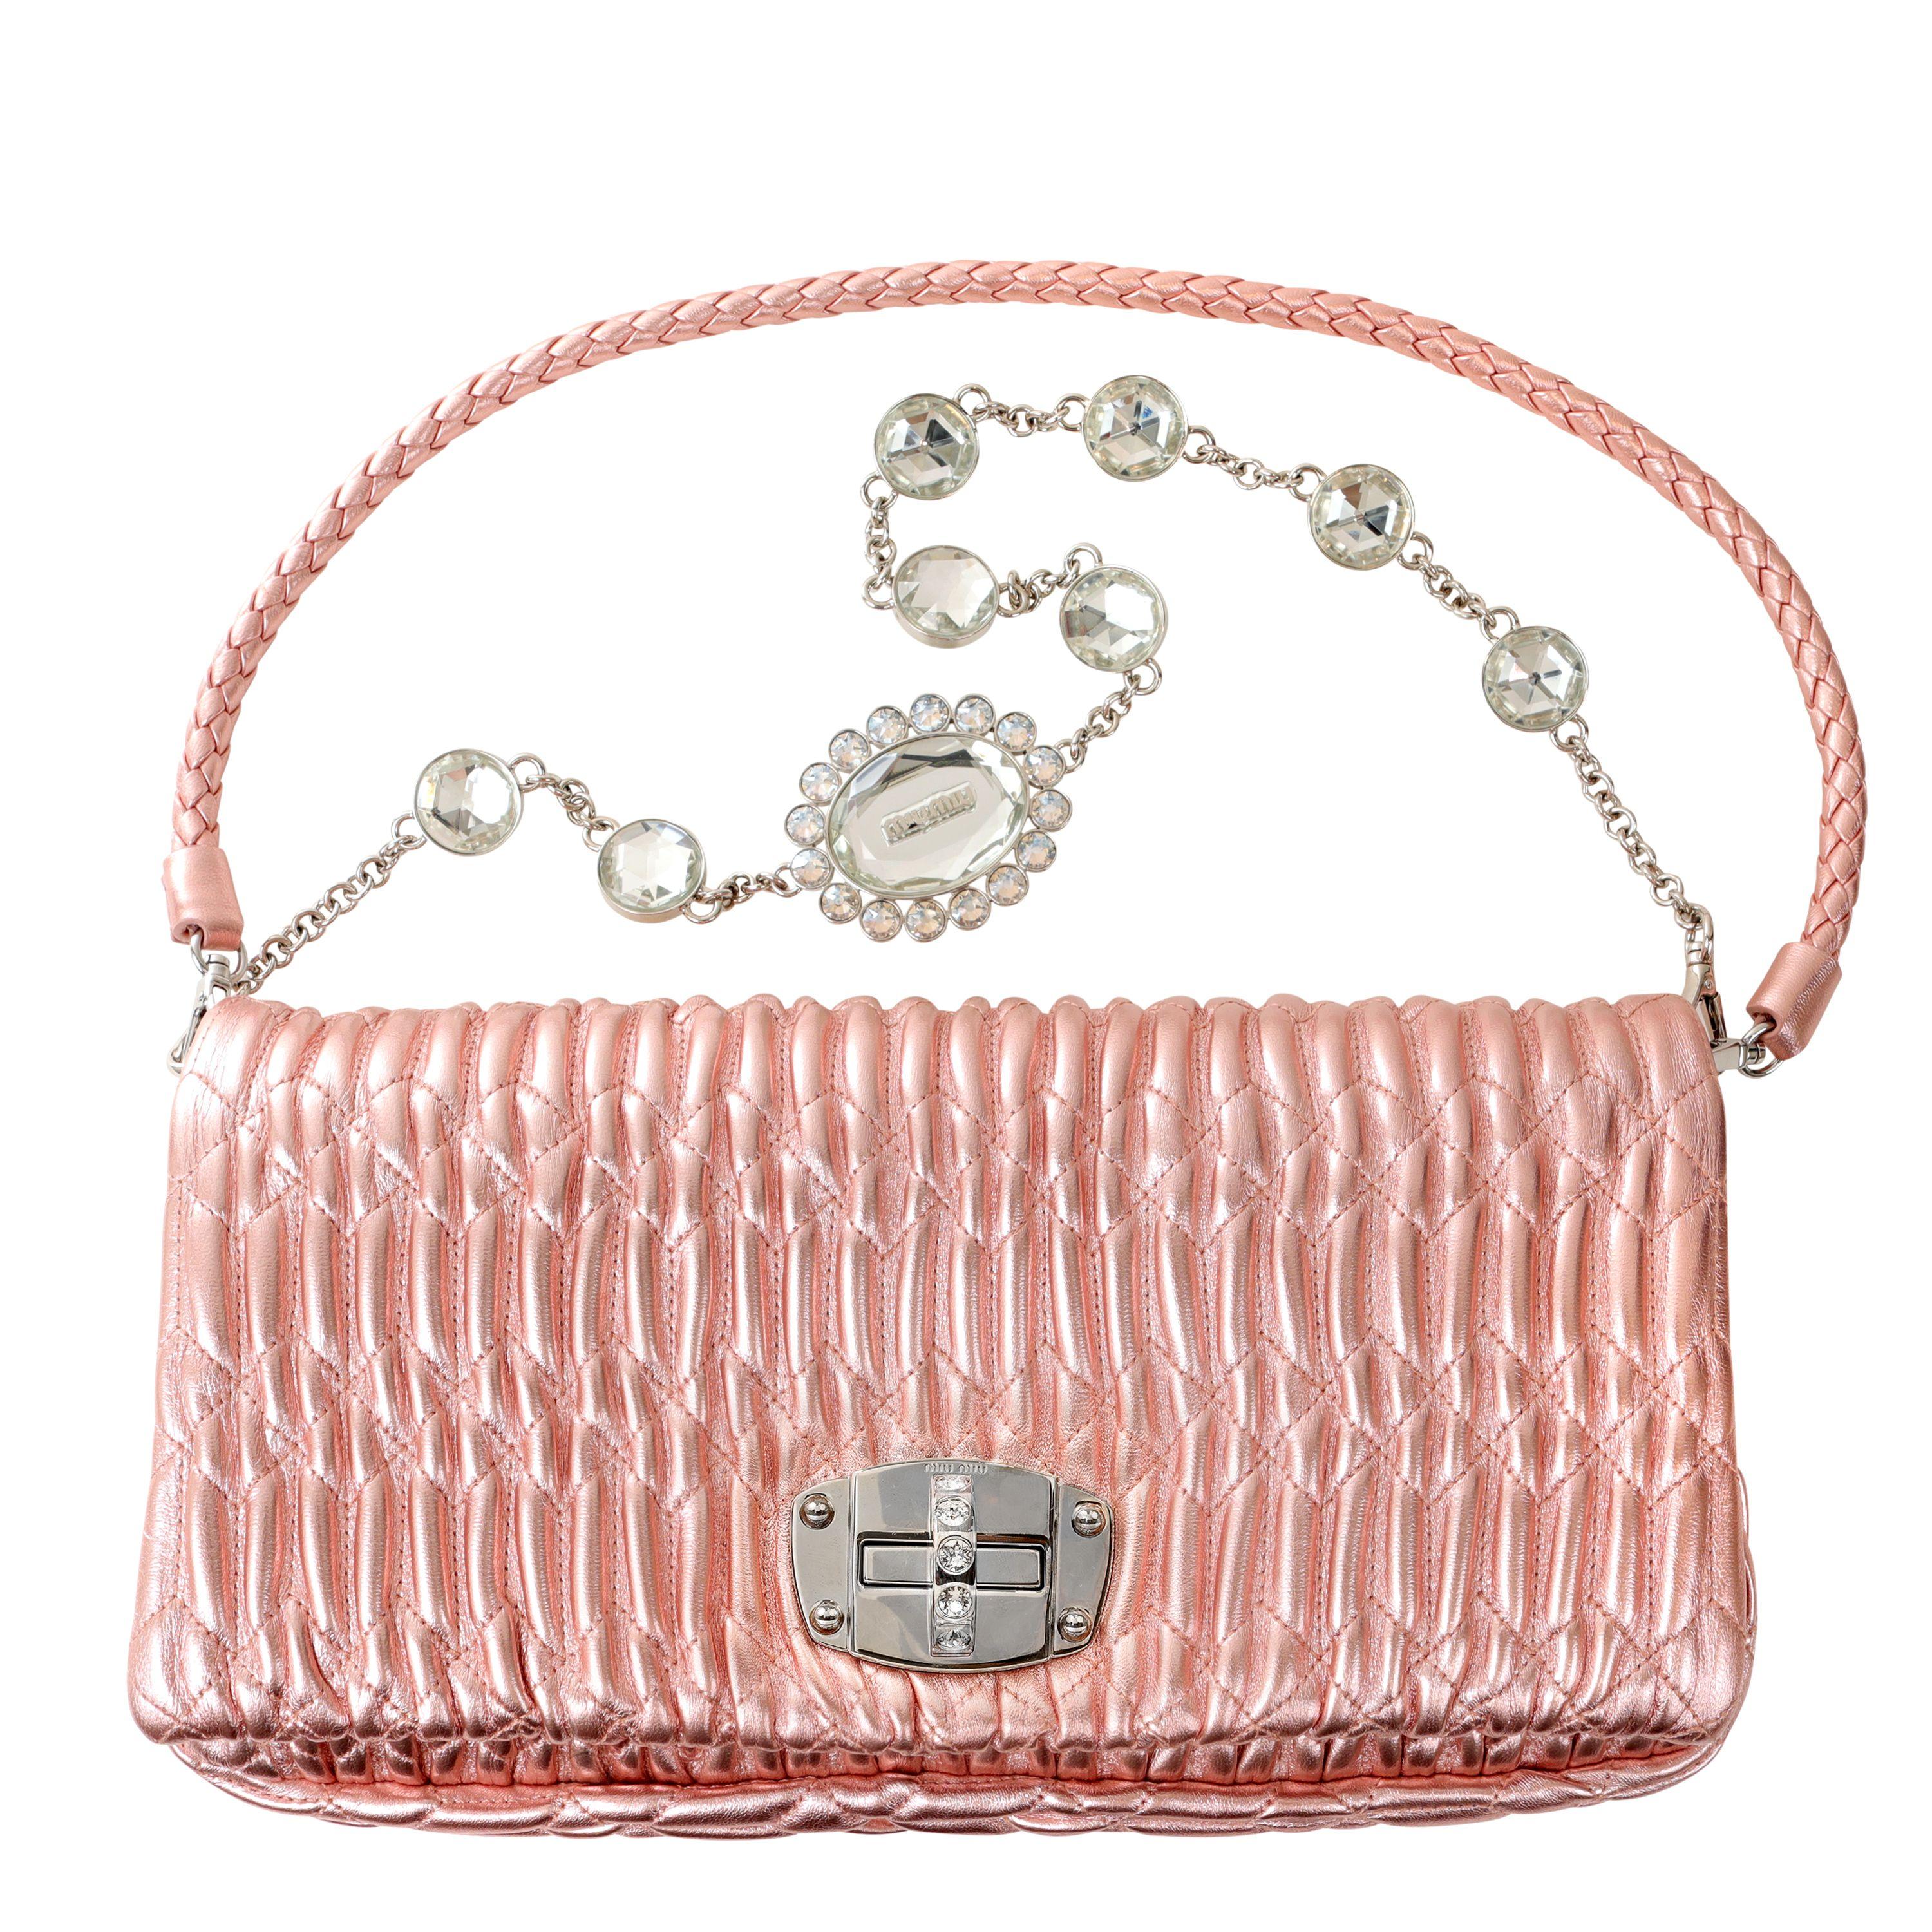 Beige Miu Miu Metallic Pink Crystal Iconic Cloquè Small Bag with Silver Hardware For Sale